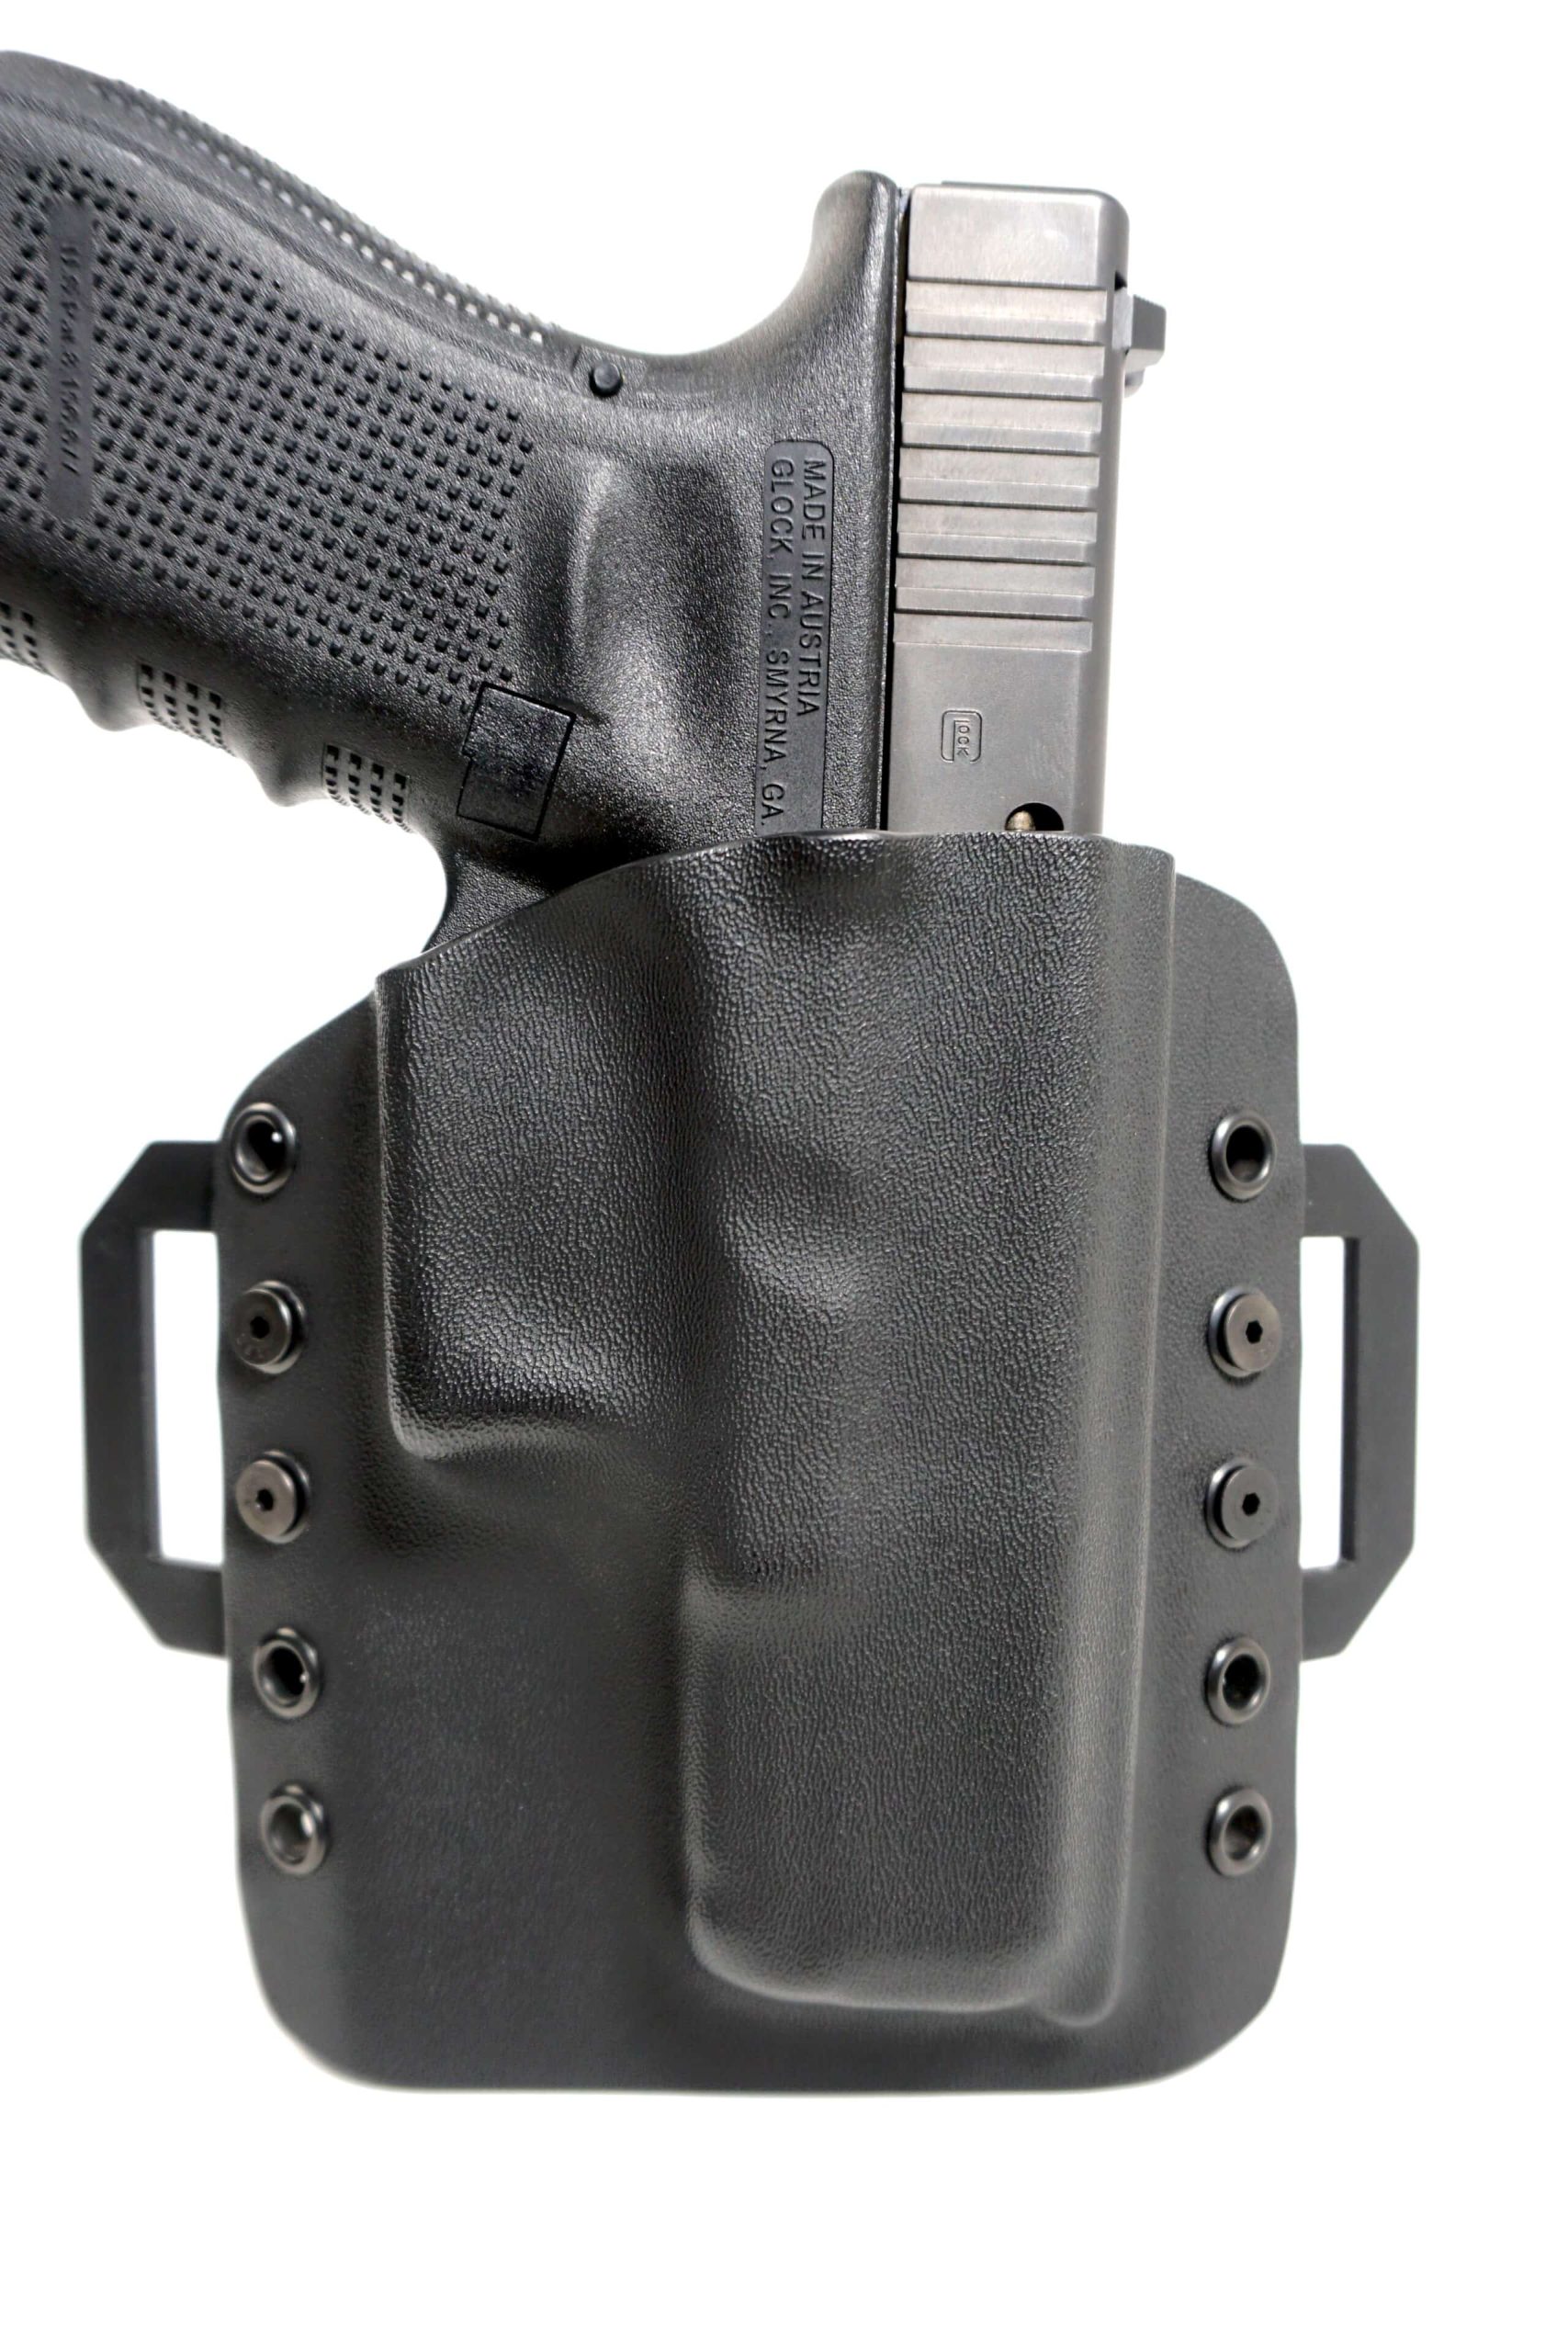 Kydex Holster Glock 19